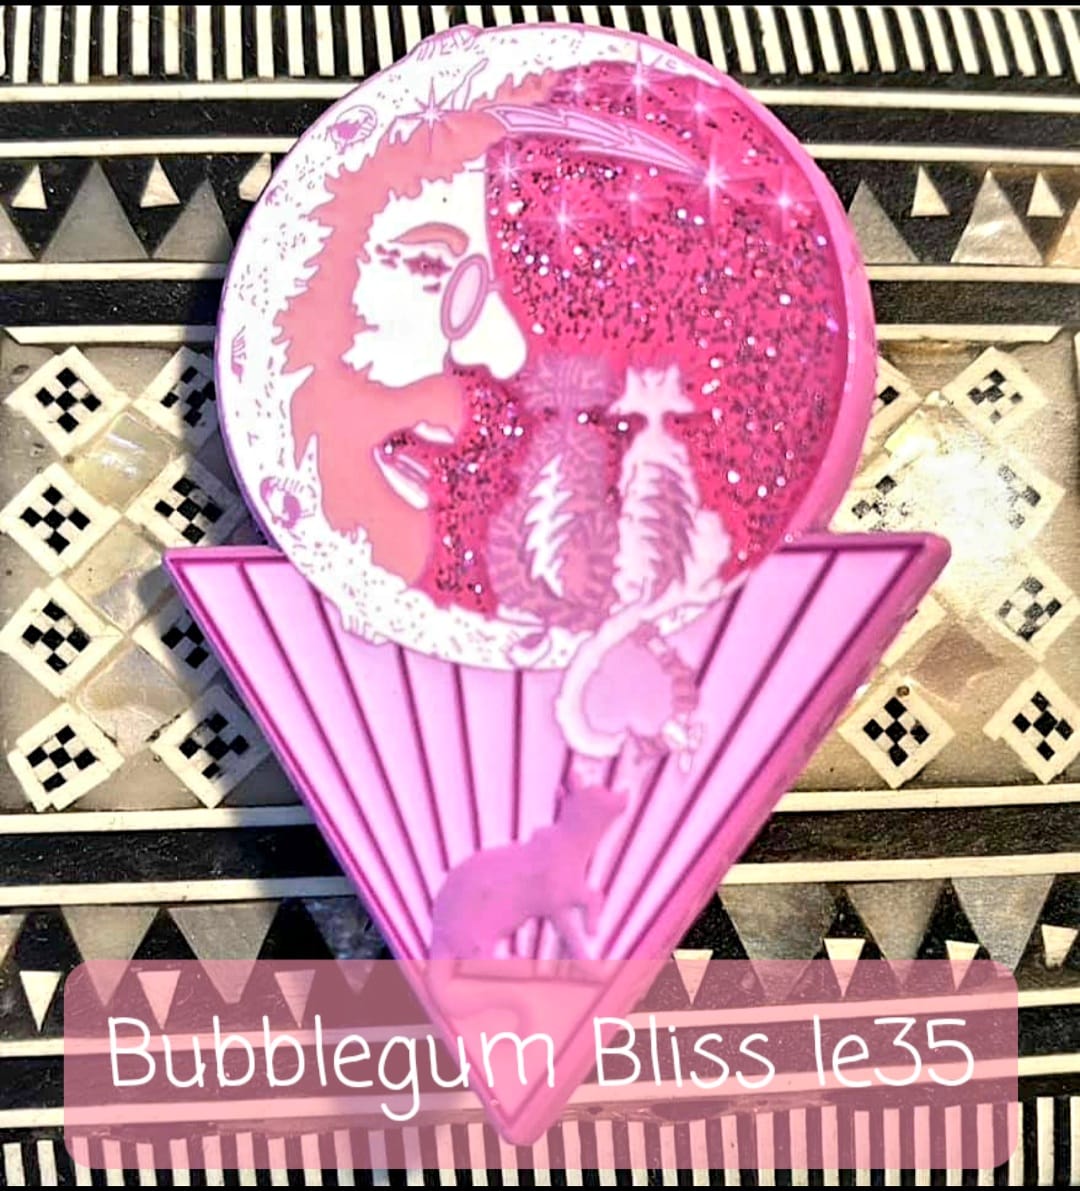 Cats Under the Jerry Moon - Bubblegum Bliss le35